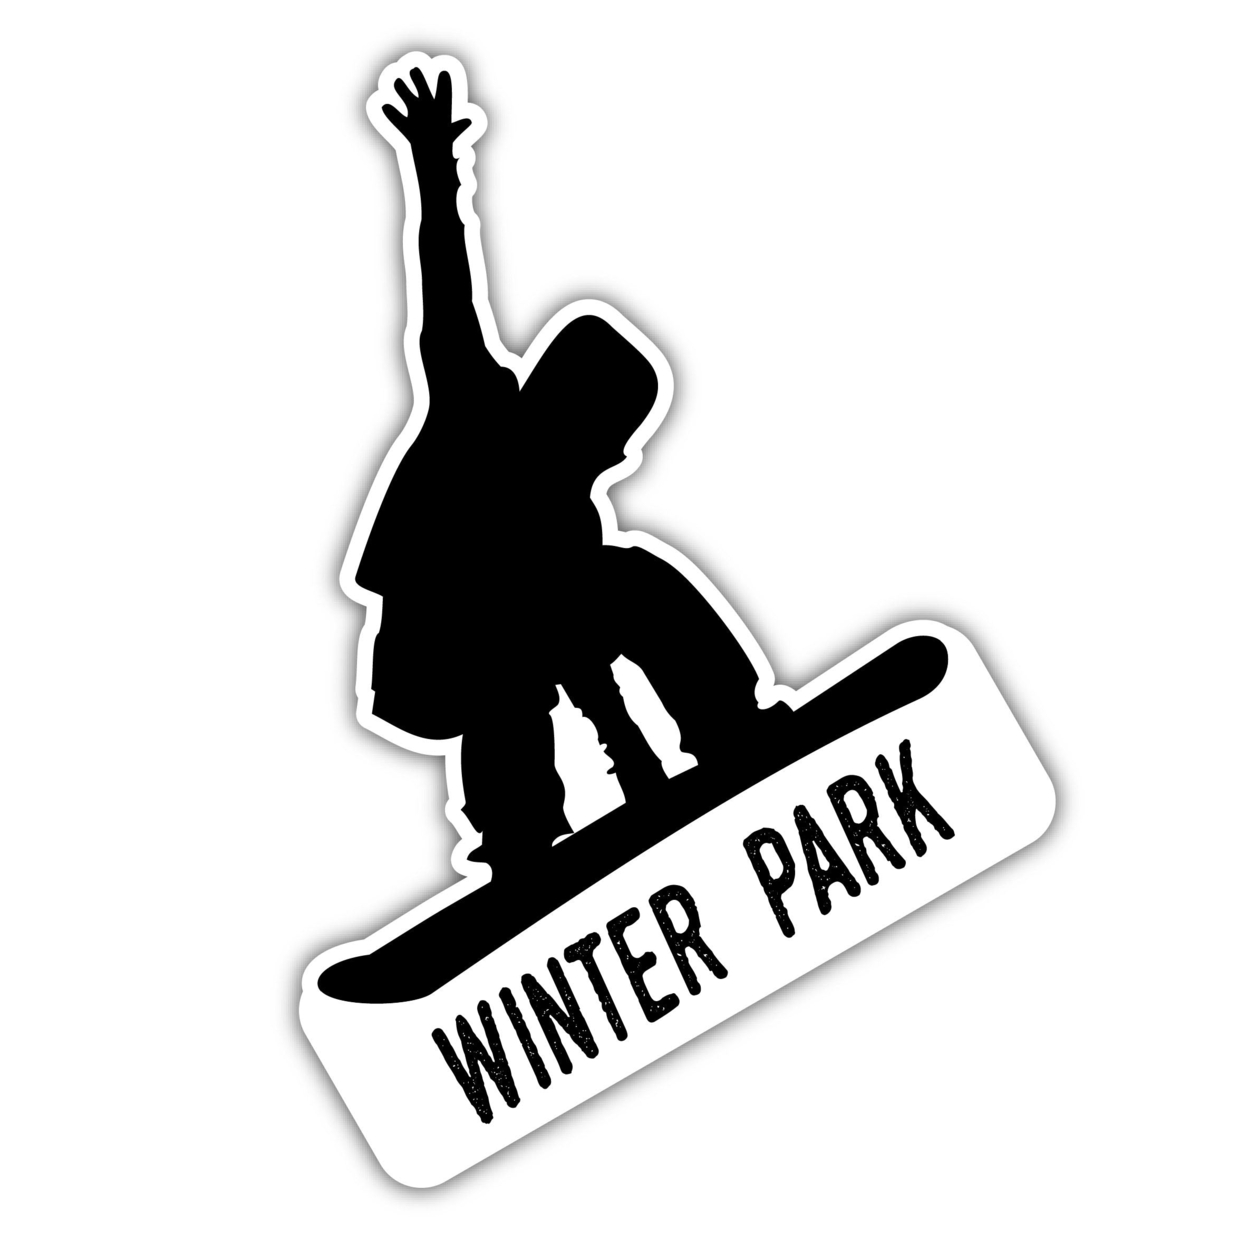 Winter Park Colorado Ski Adventures Souvenir 4 Inch Vinyl Decal Sticker Board Design